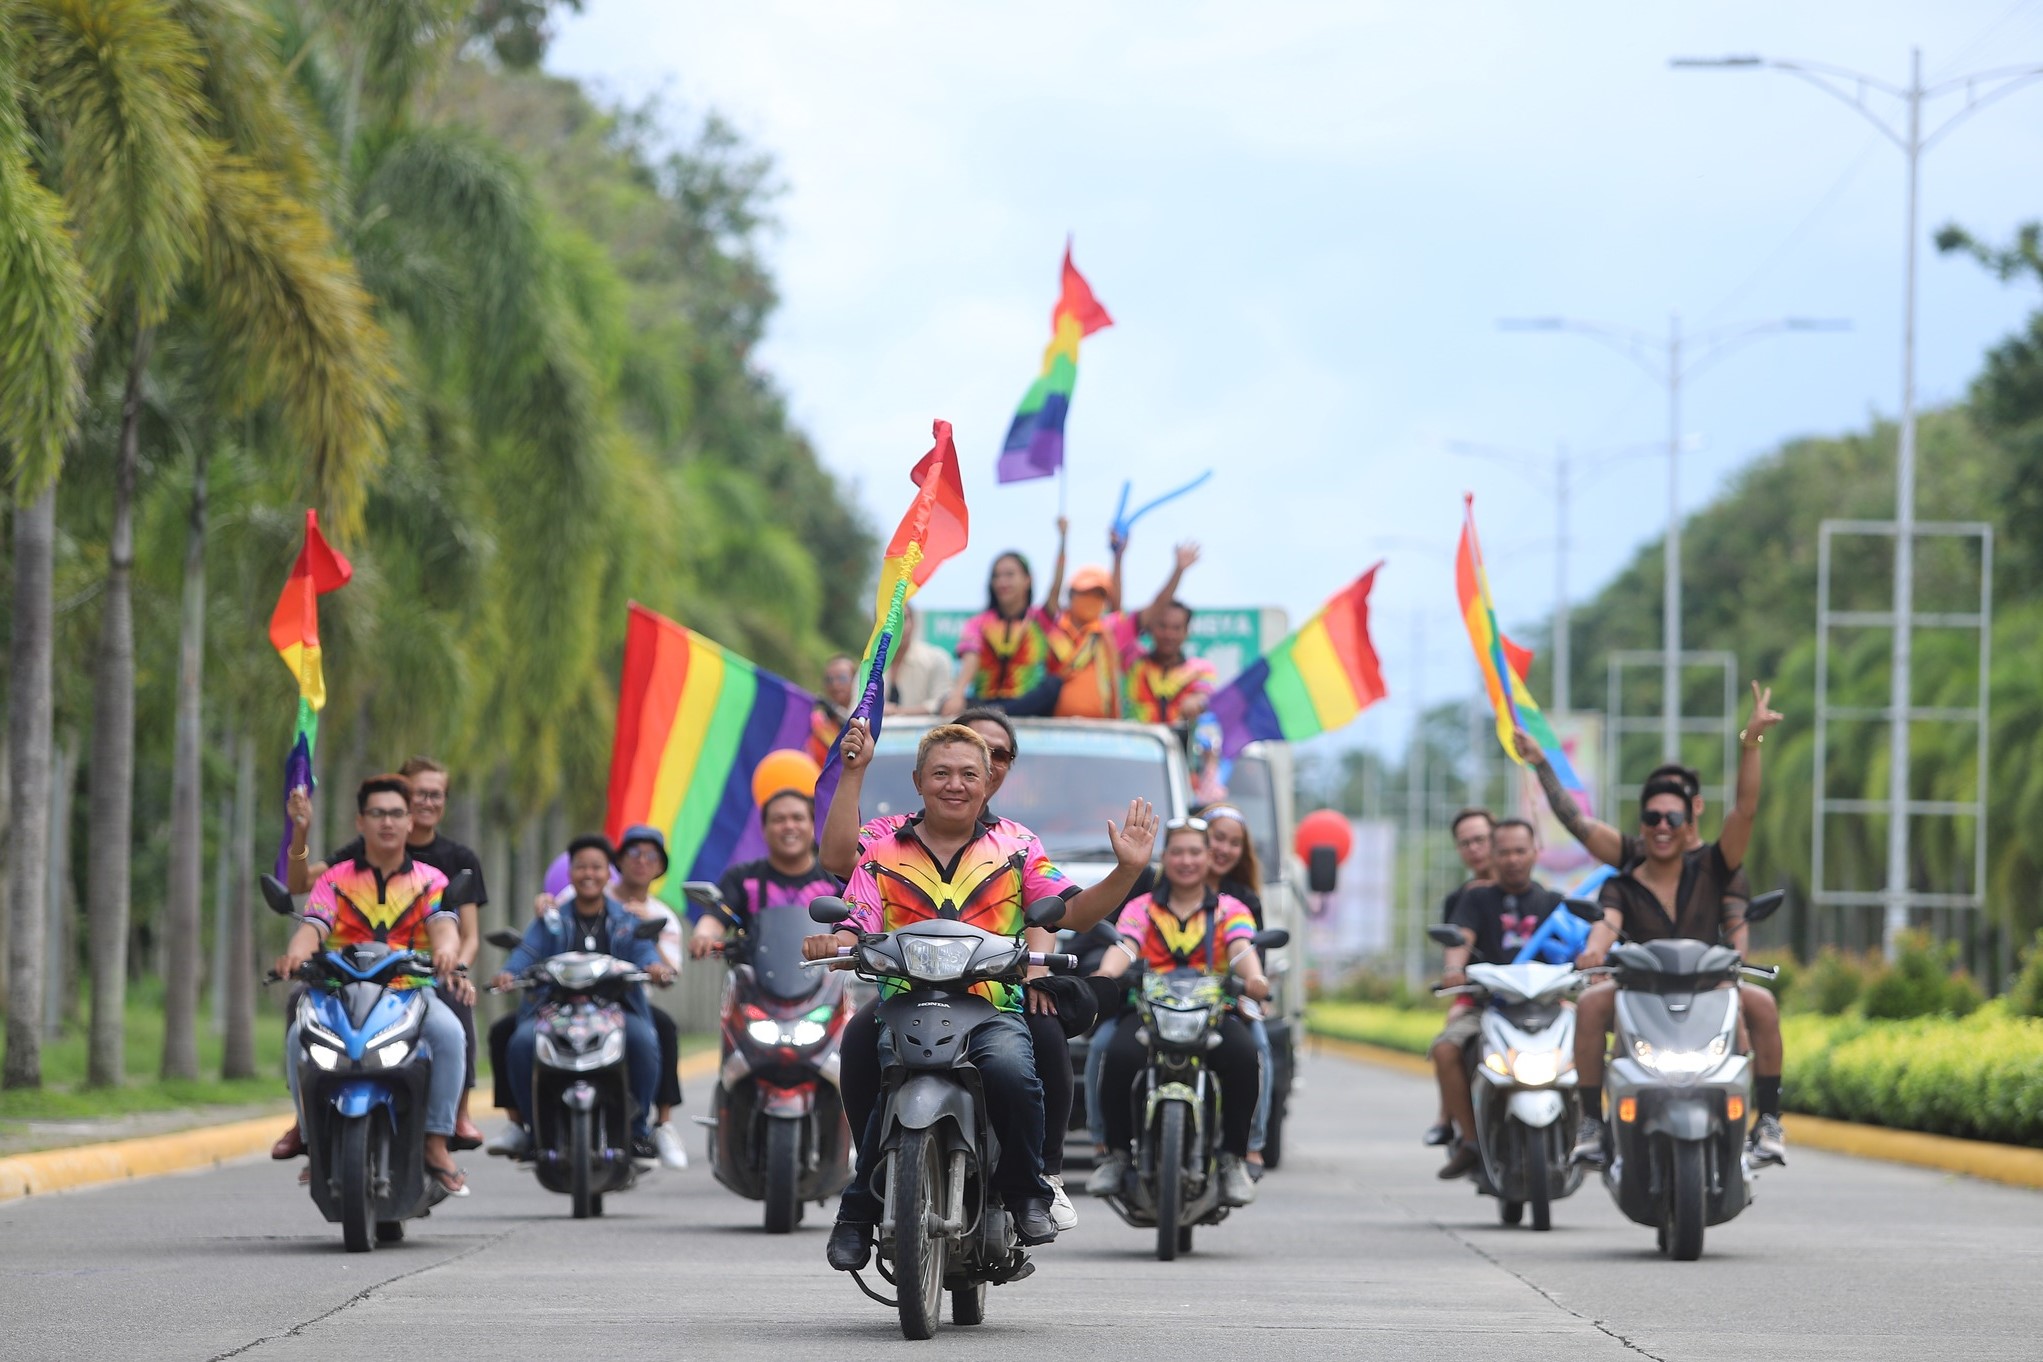 Harmonious Pride: Uniting the Joyful Spirit of Gender Equality